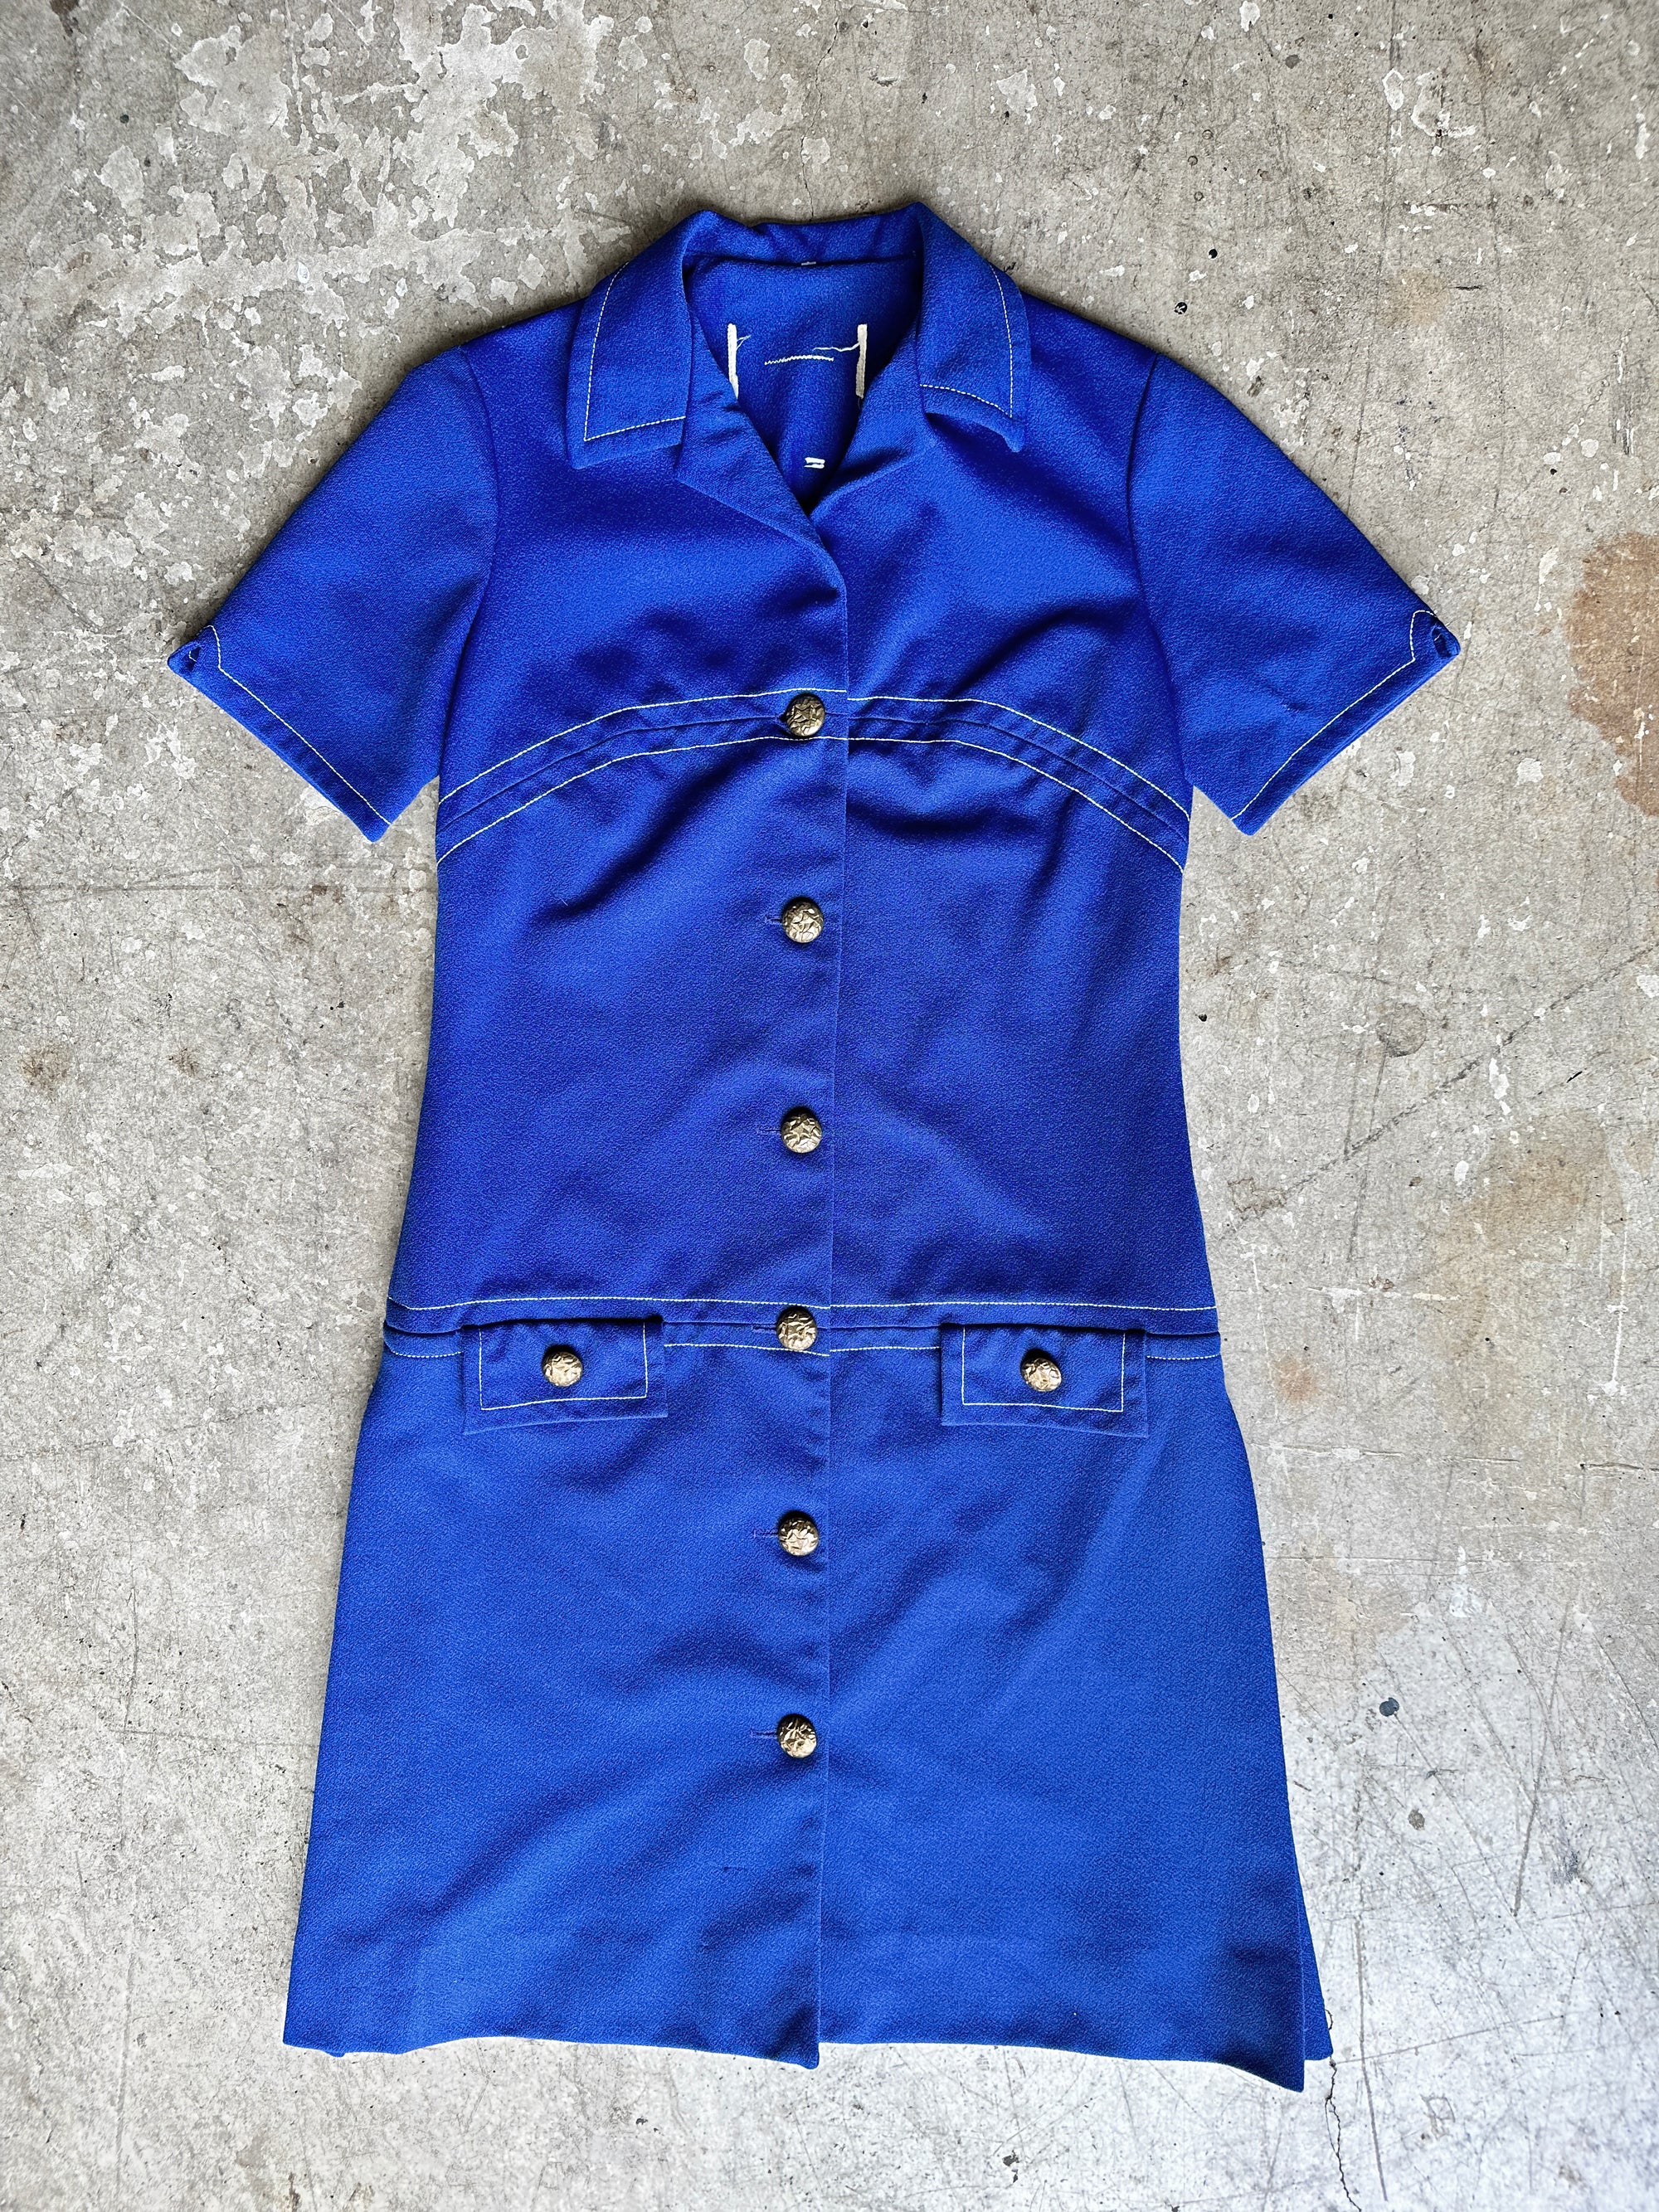 1970s Royal Blue Shift Dress